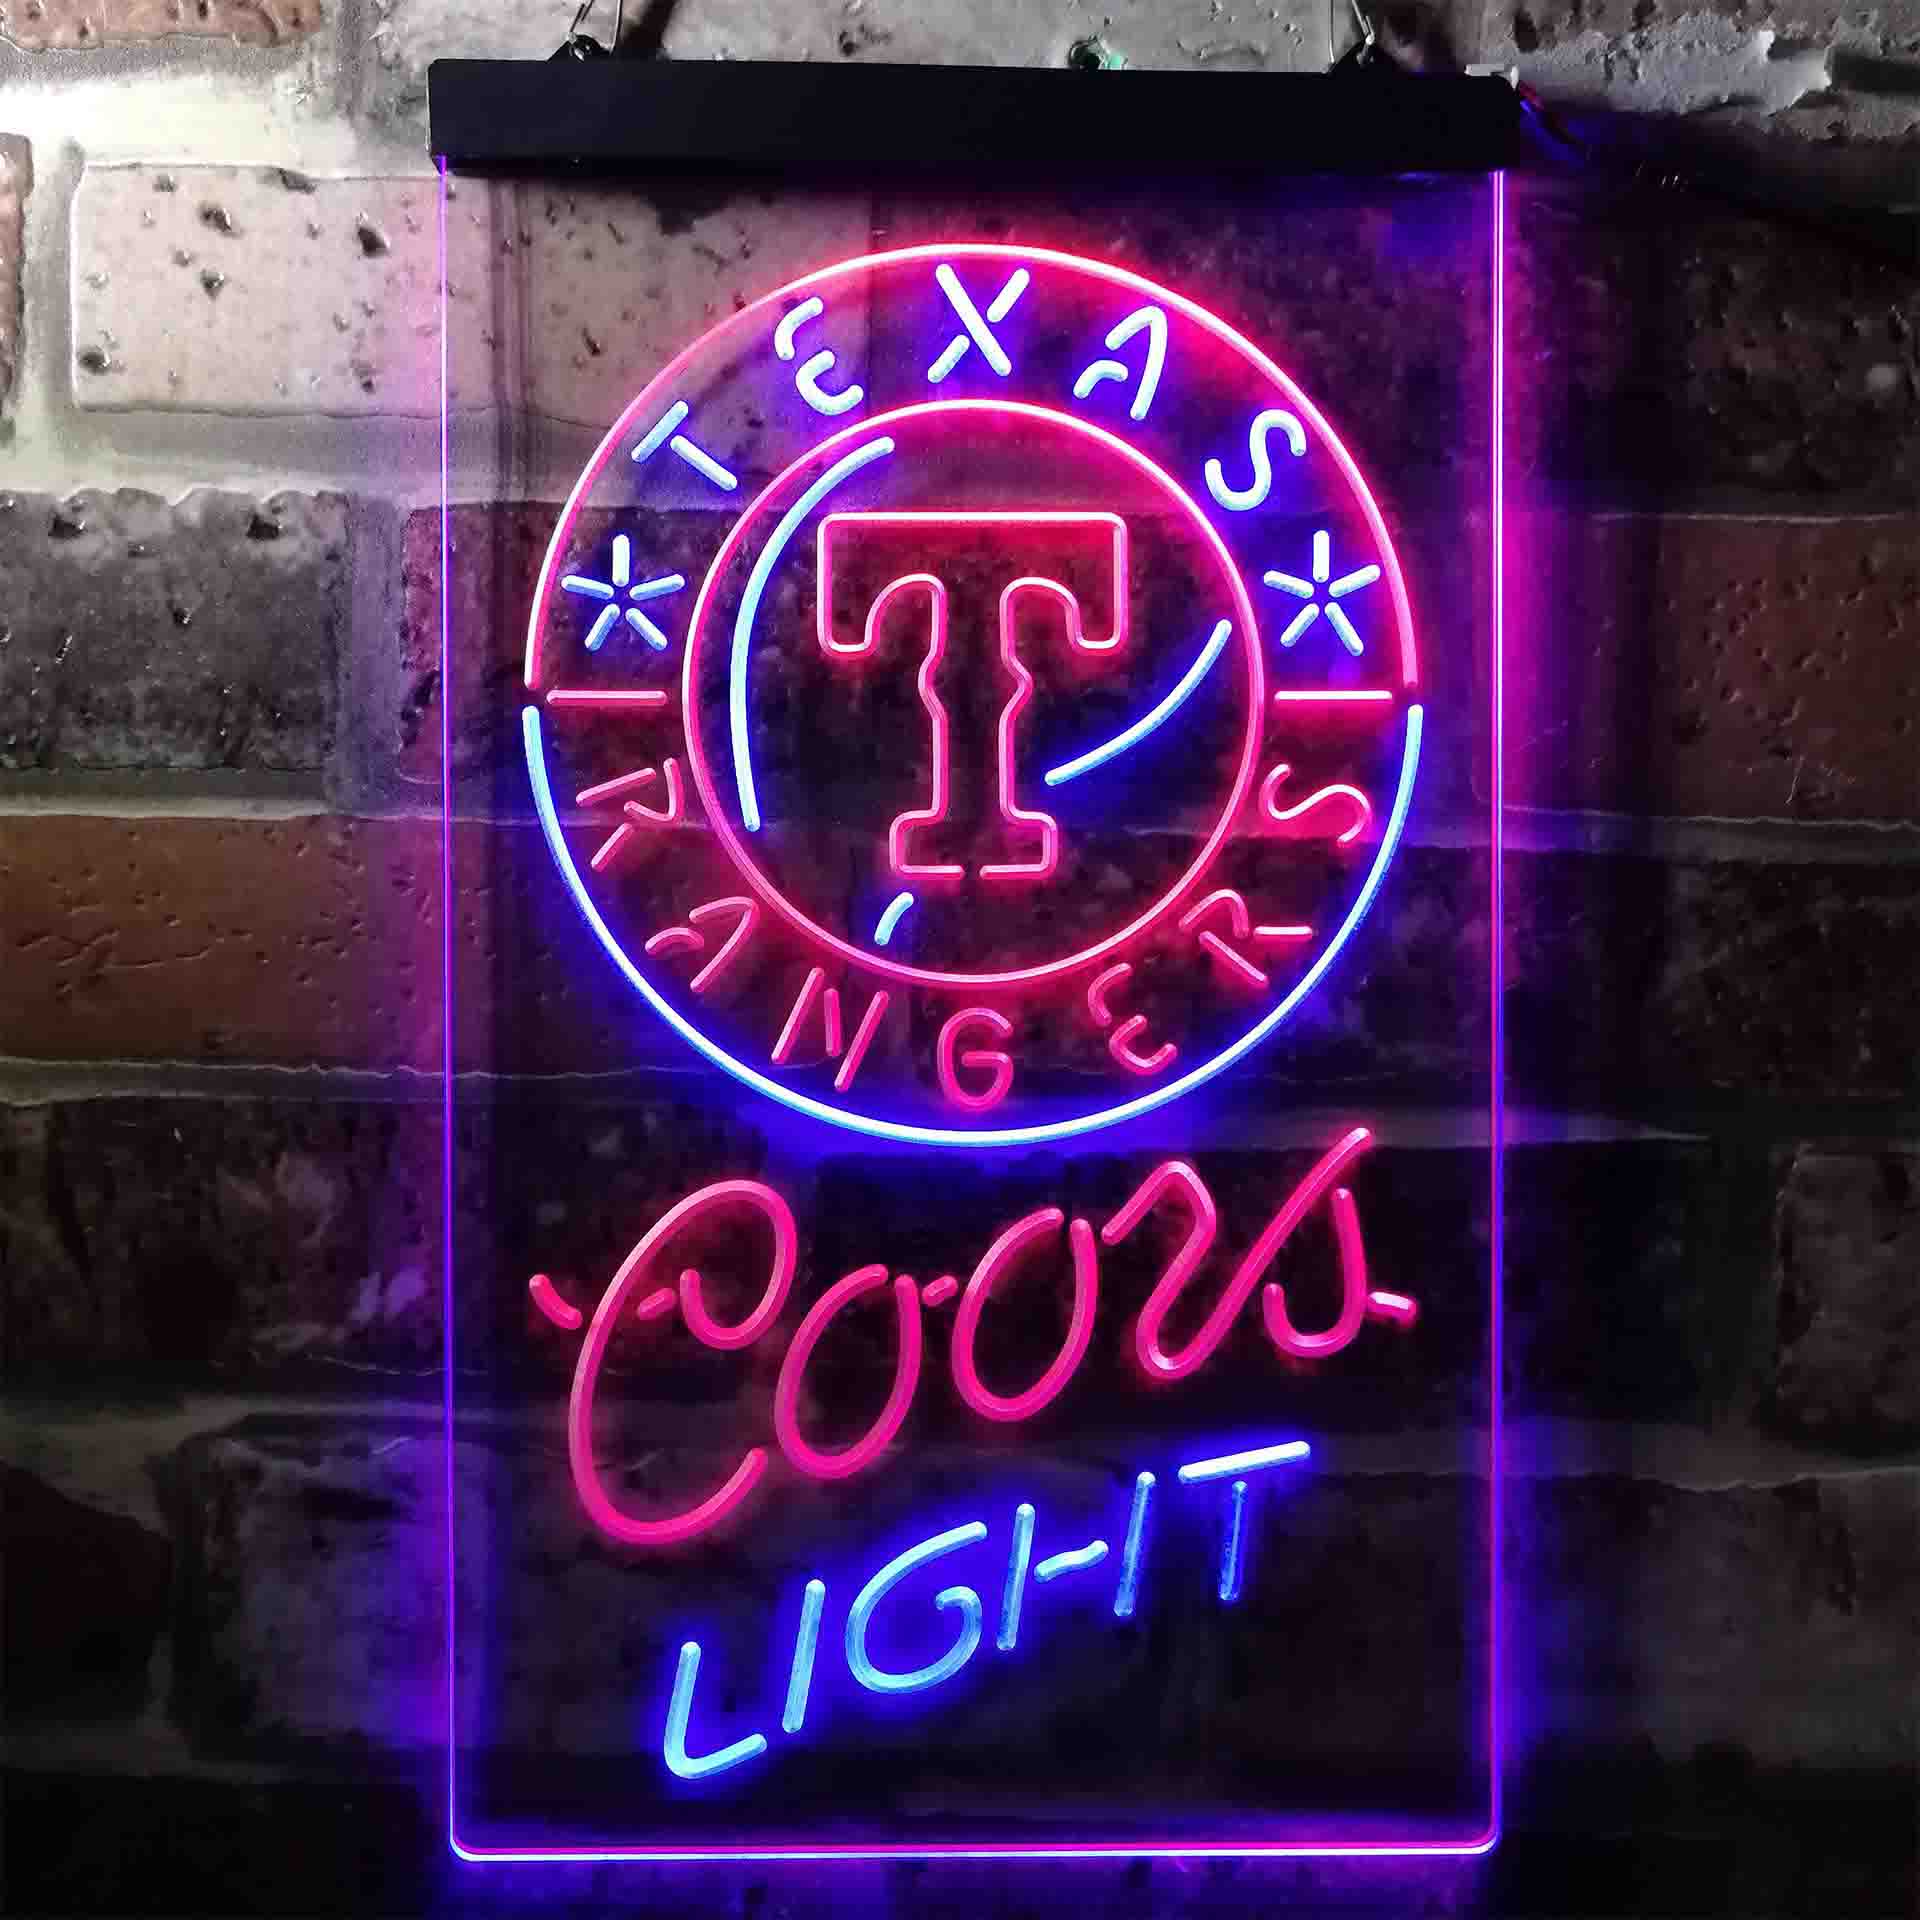 Texas Rangers Coors Light Neon-Like LED Sign